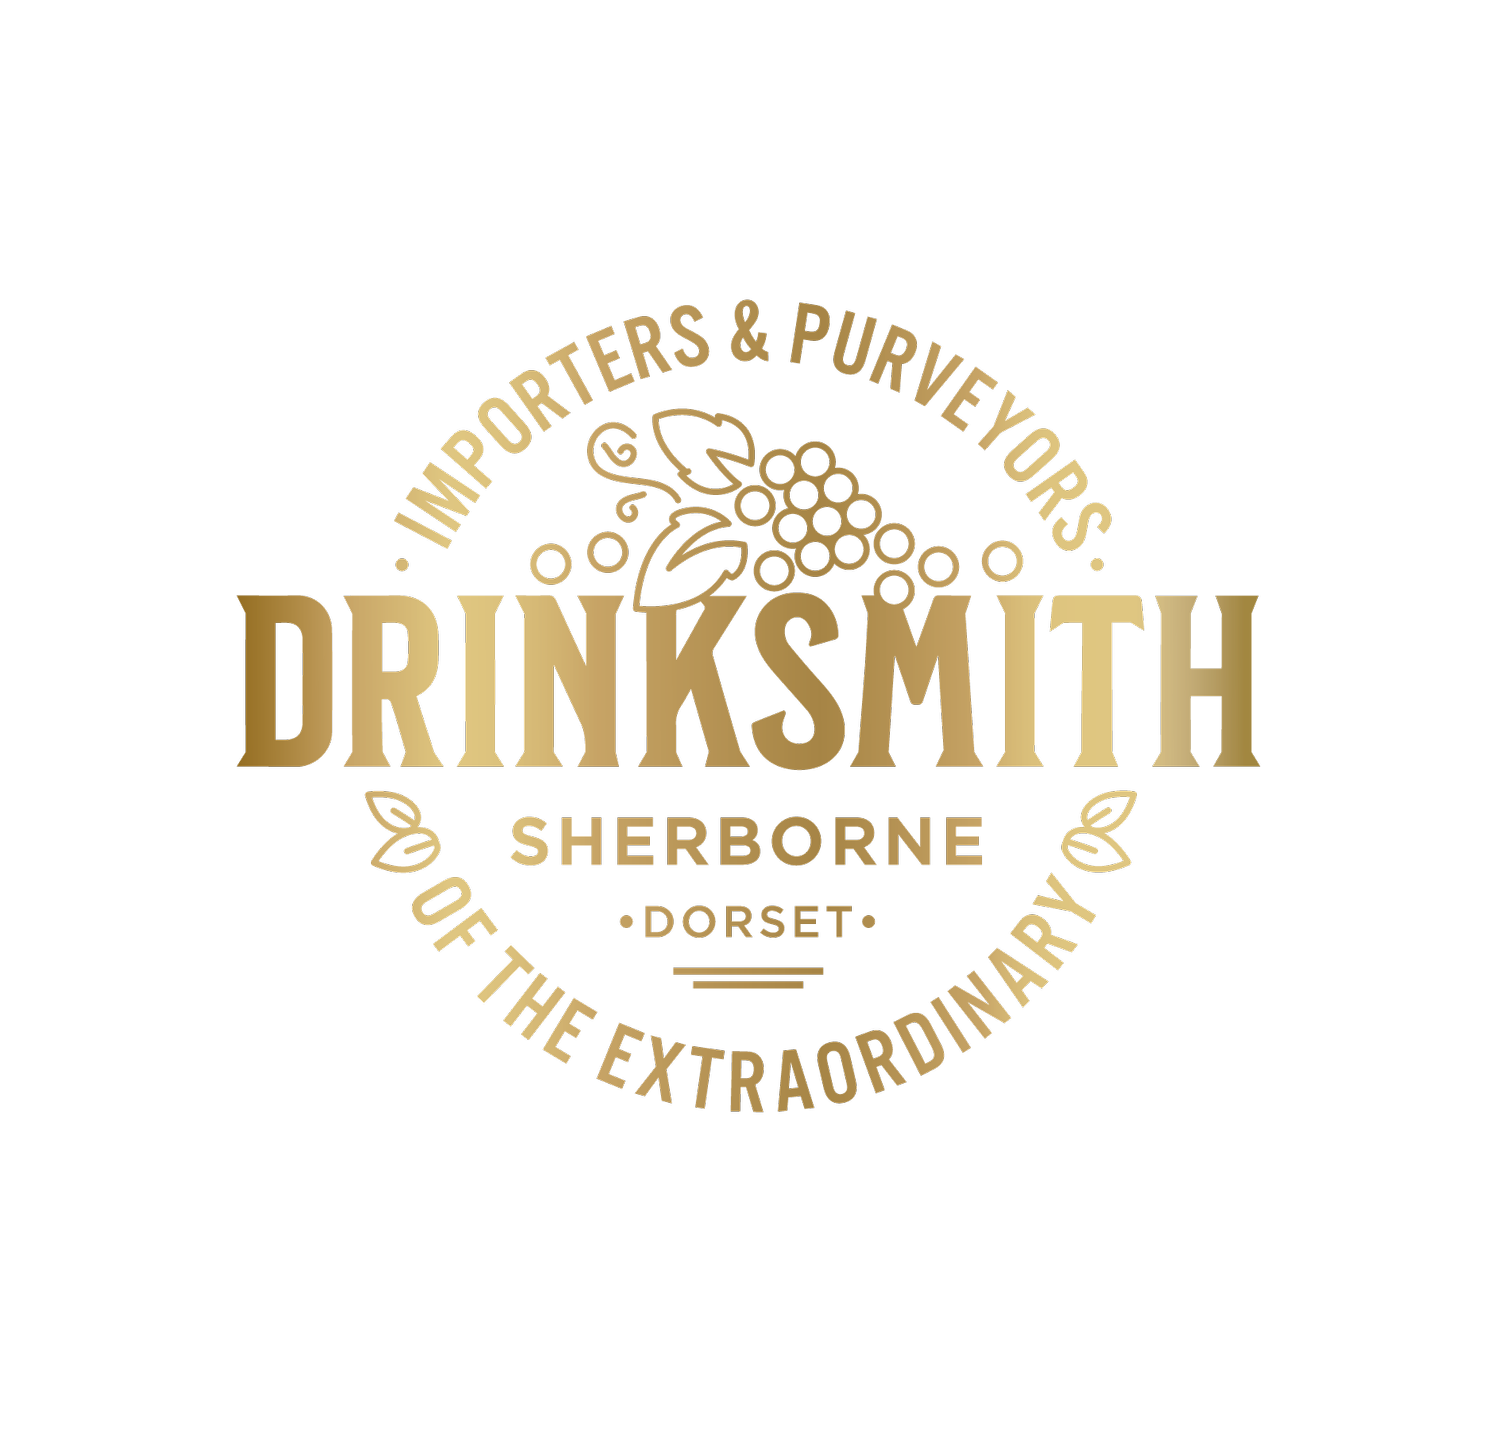 The Drinksmith